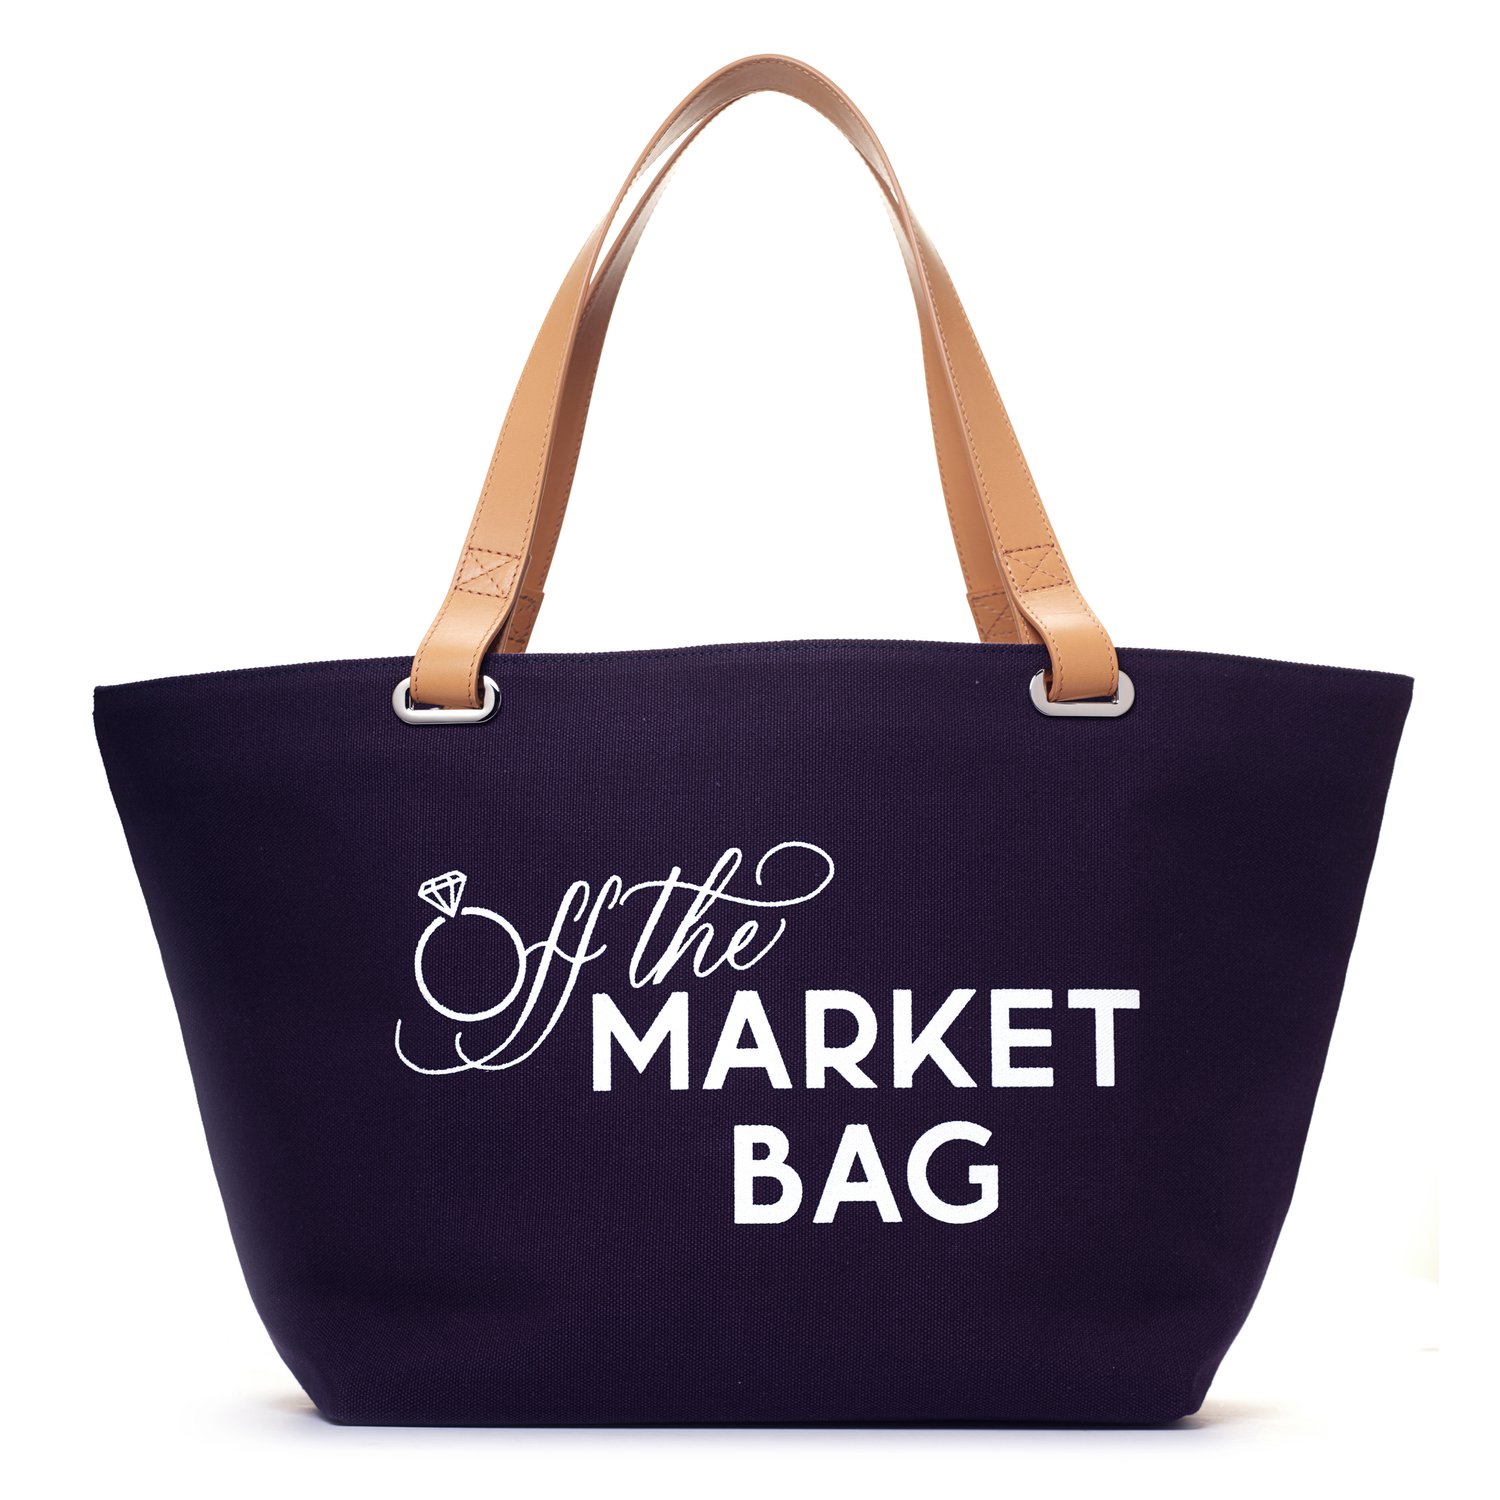 Any Bag £10 #marmaris #bags #bagshopping #dadlovesfood